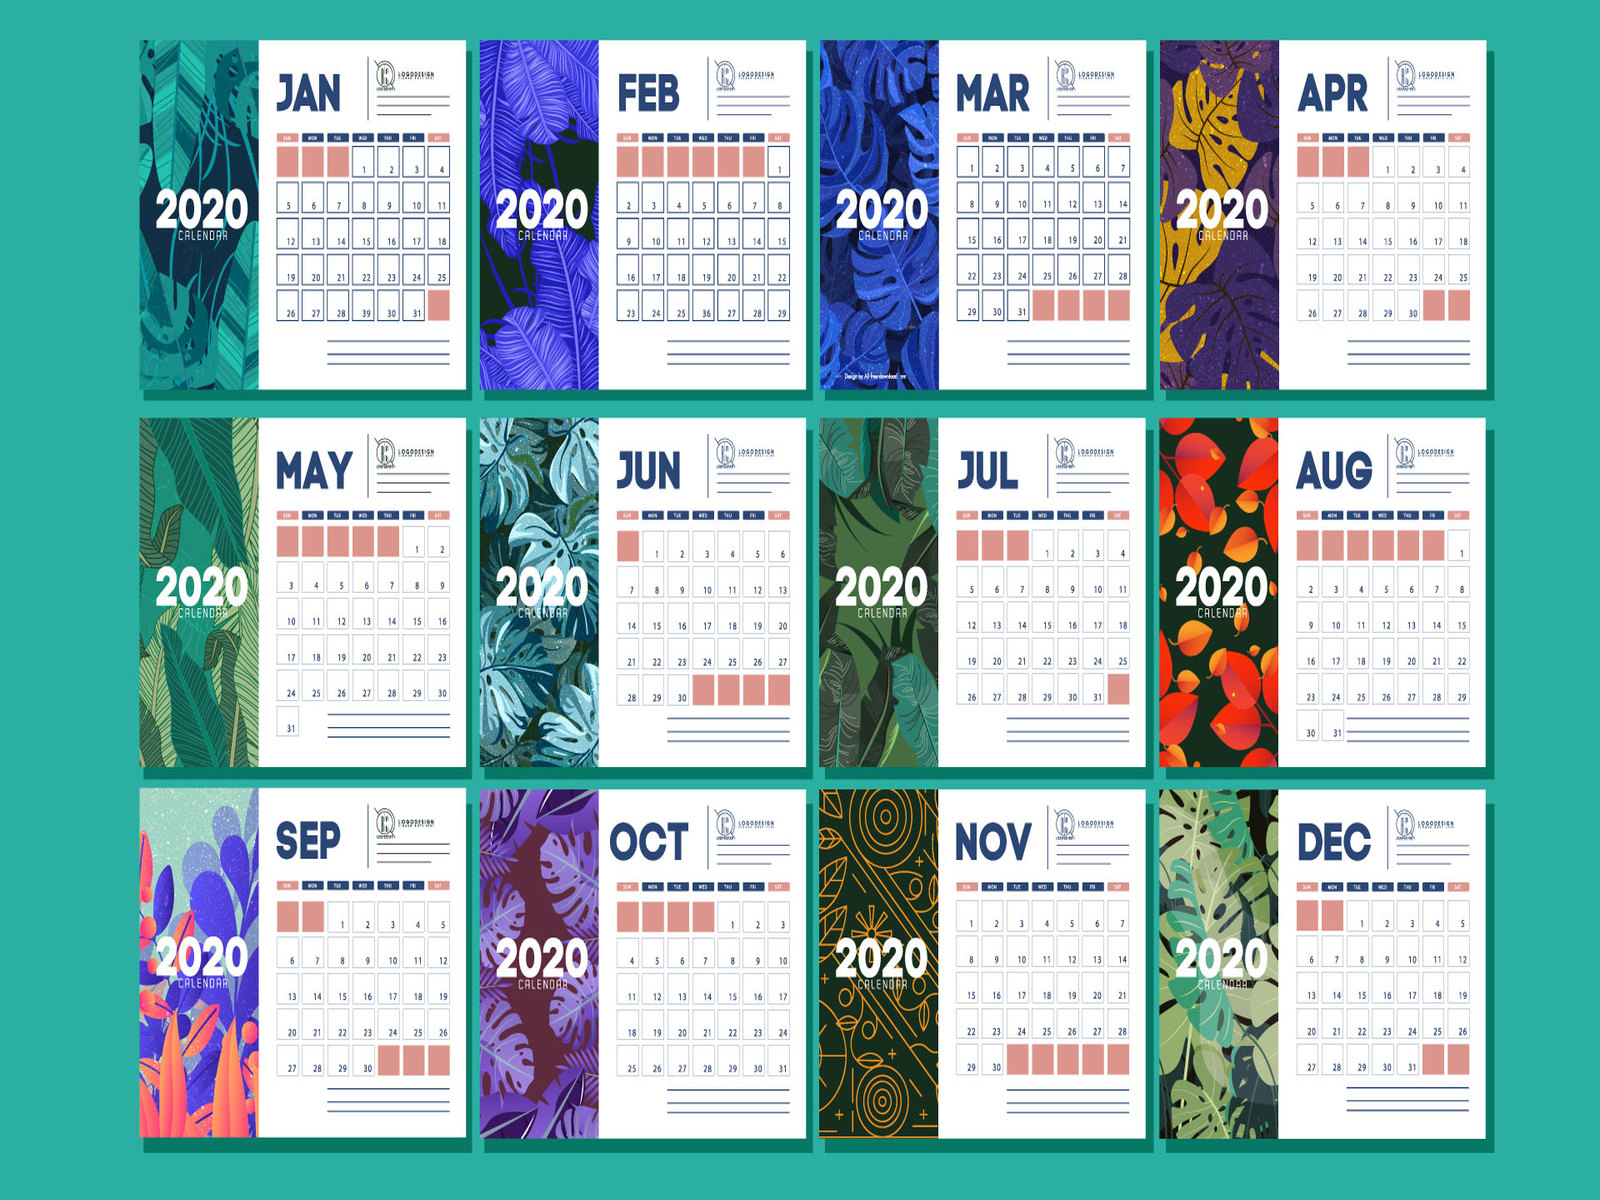 New Year 2020 calendar design by Md Shopon Hossen on Dribbble